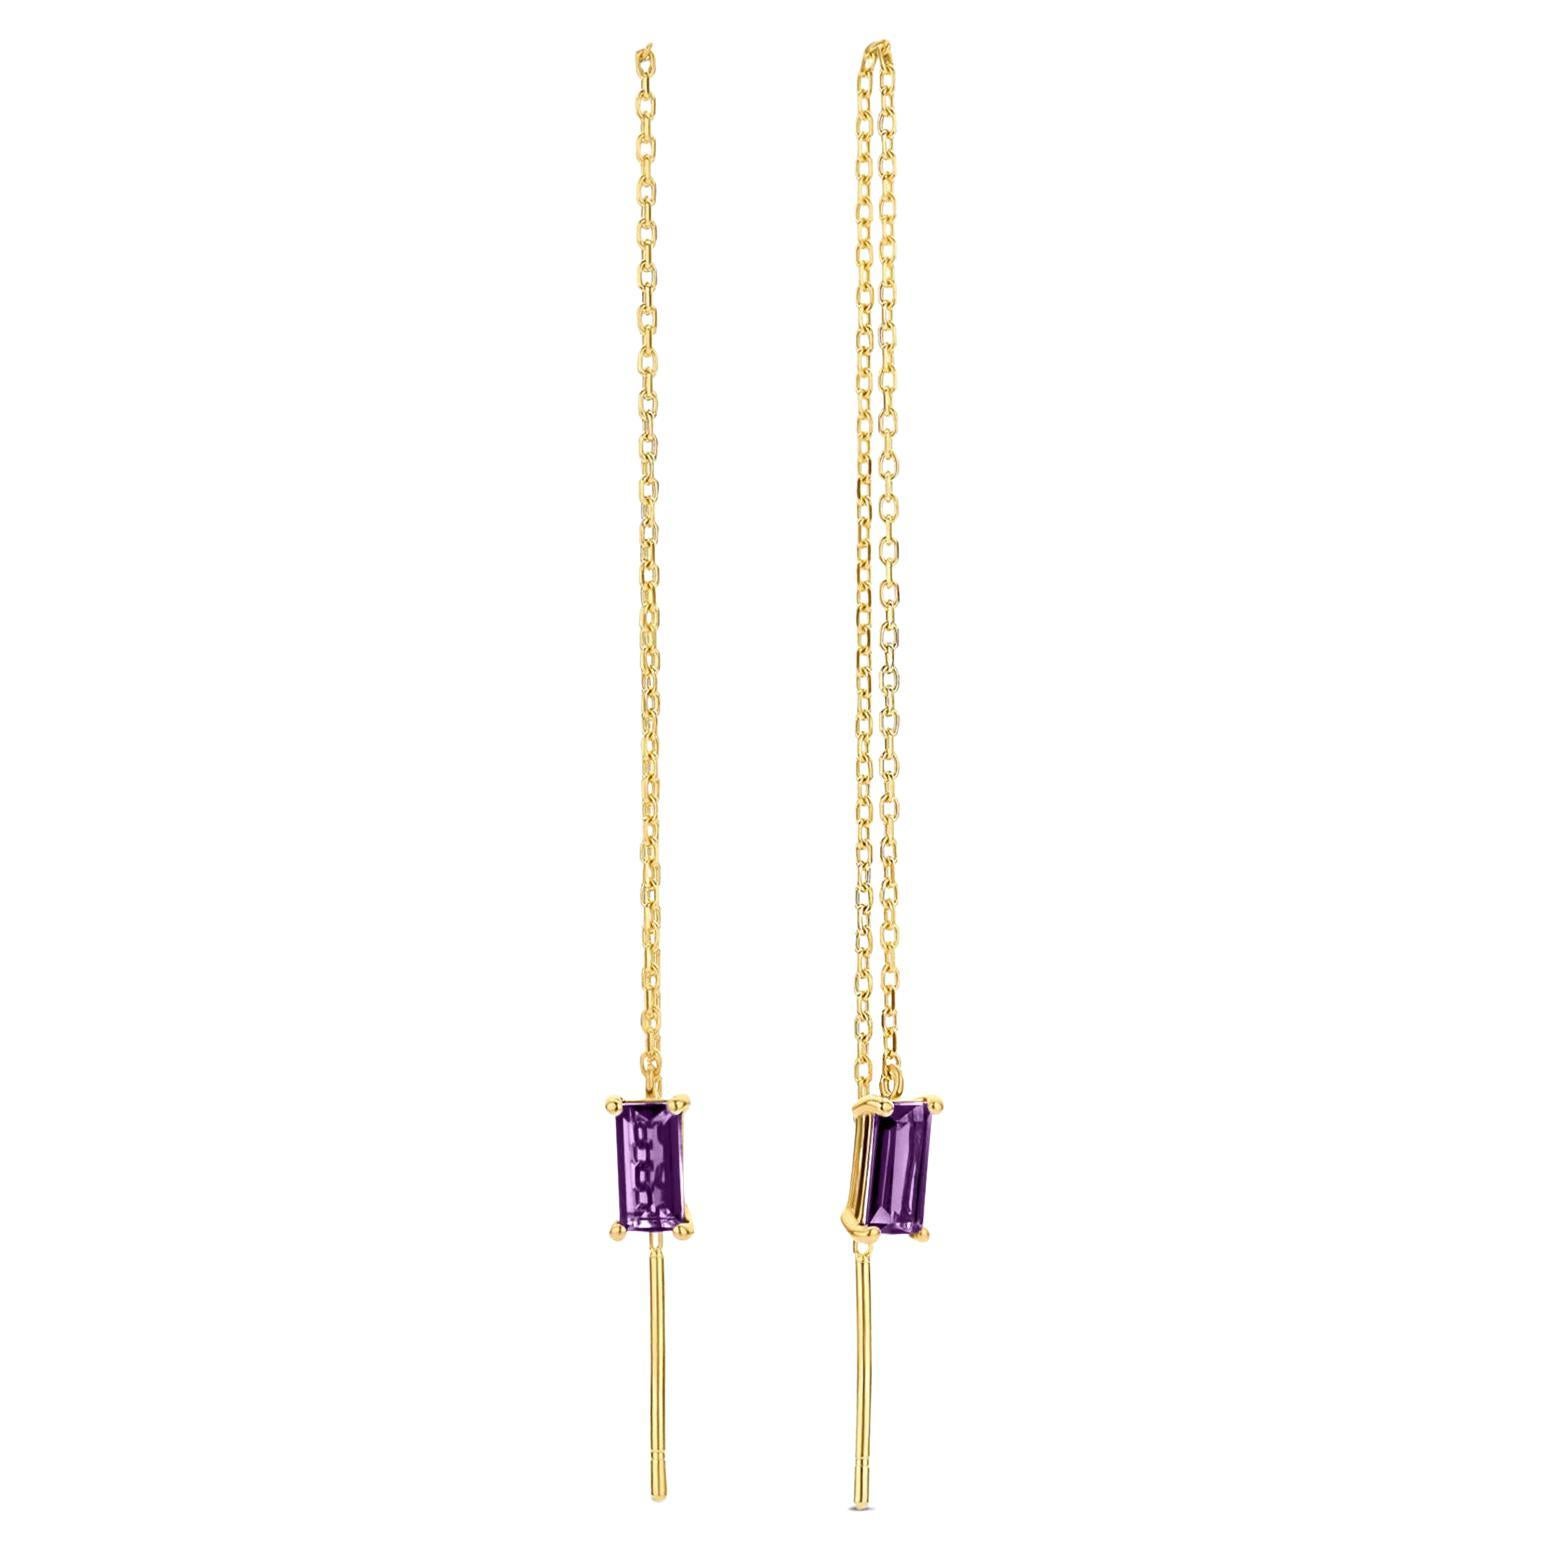 14k Solid Gold Drop Earrings with amethysts.  Chain Gold Earrings